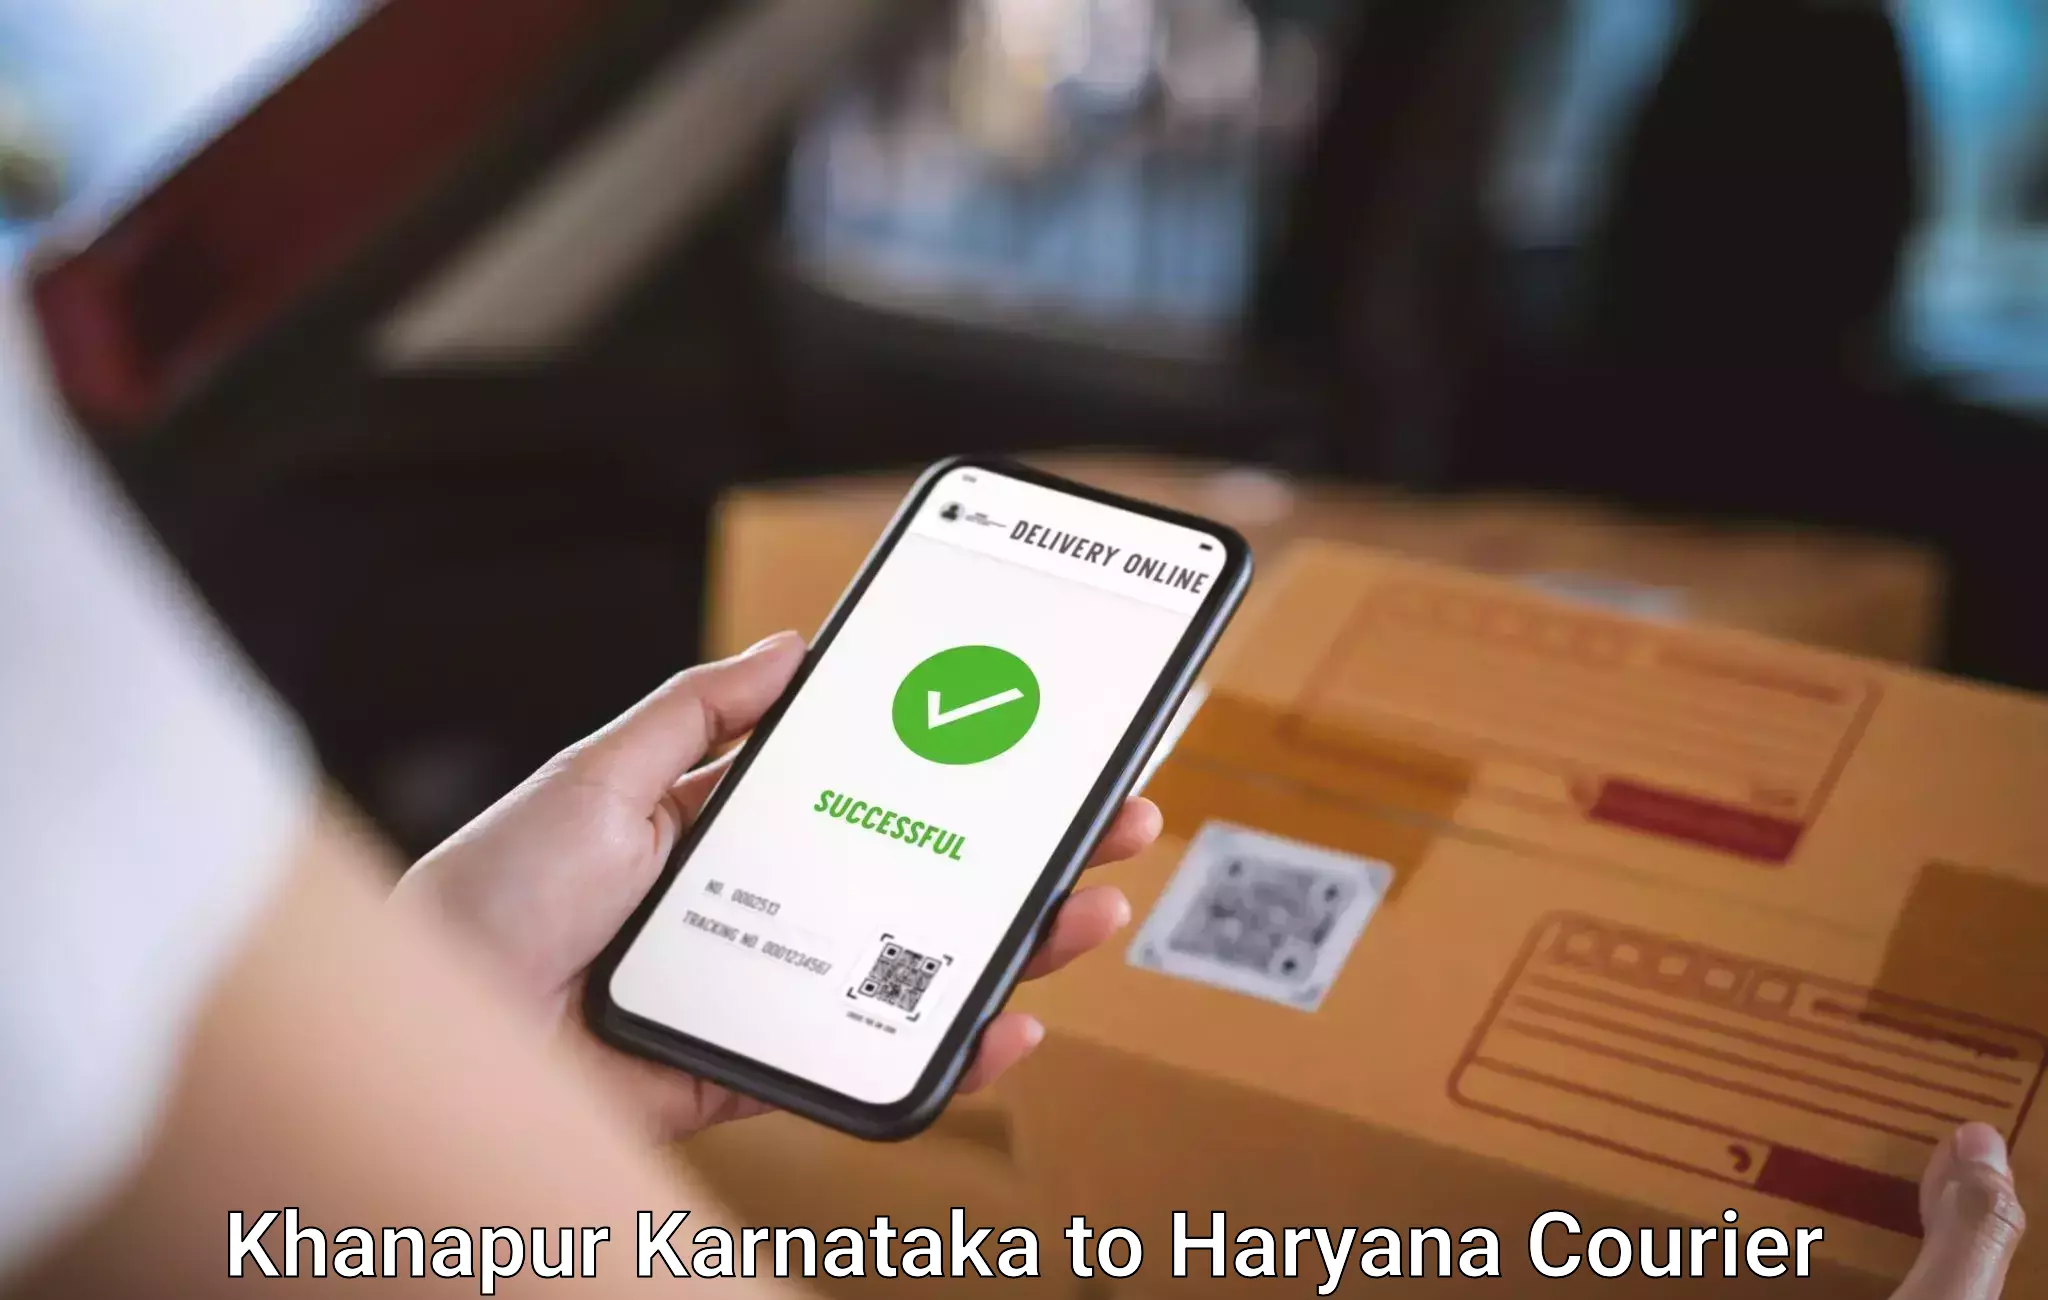 Baggage transport cost in Khanapur Karnataka to Bilaspur Haryana